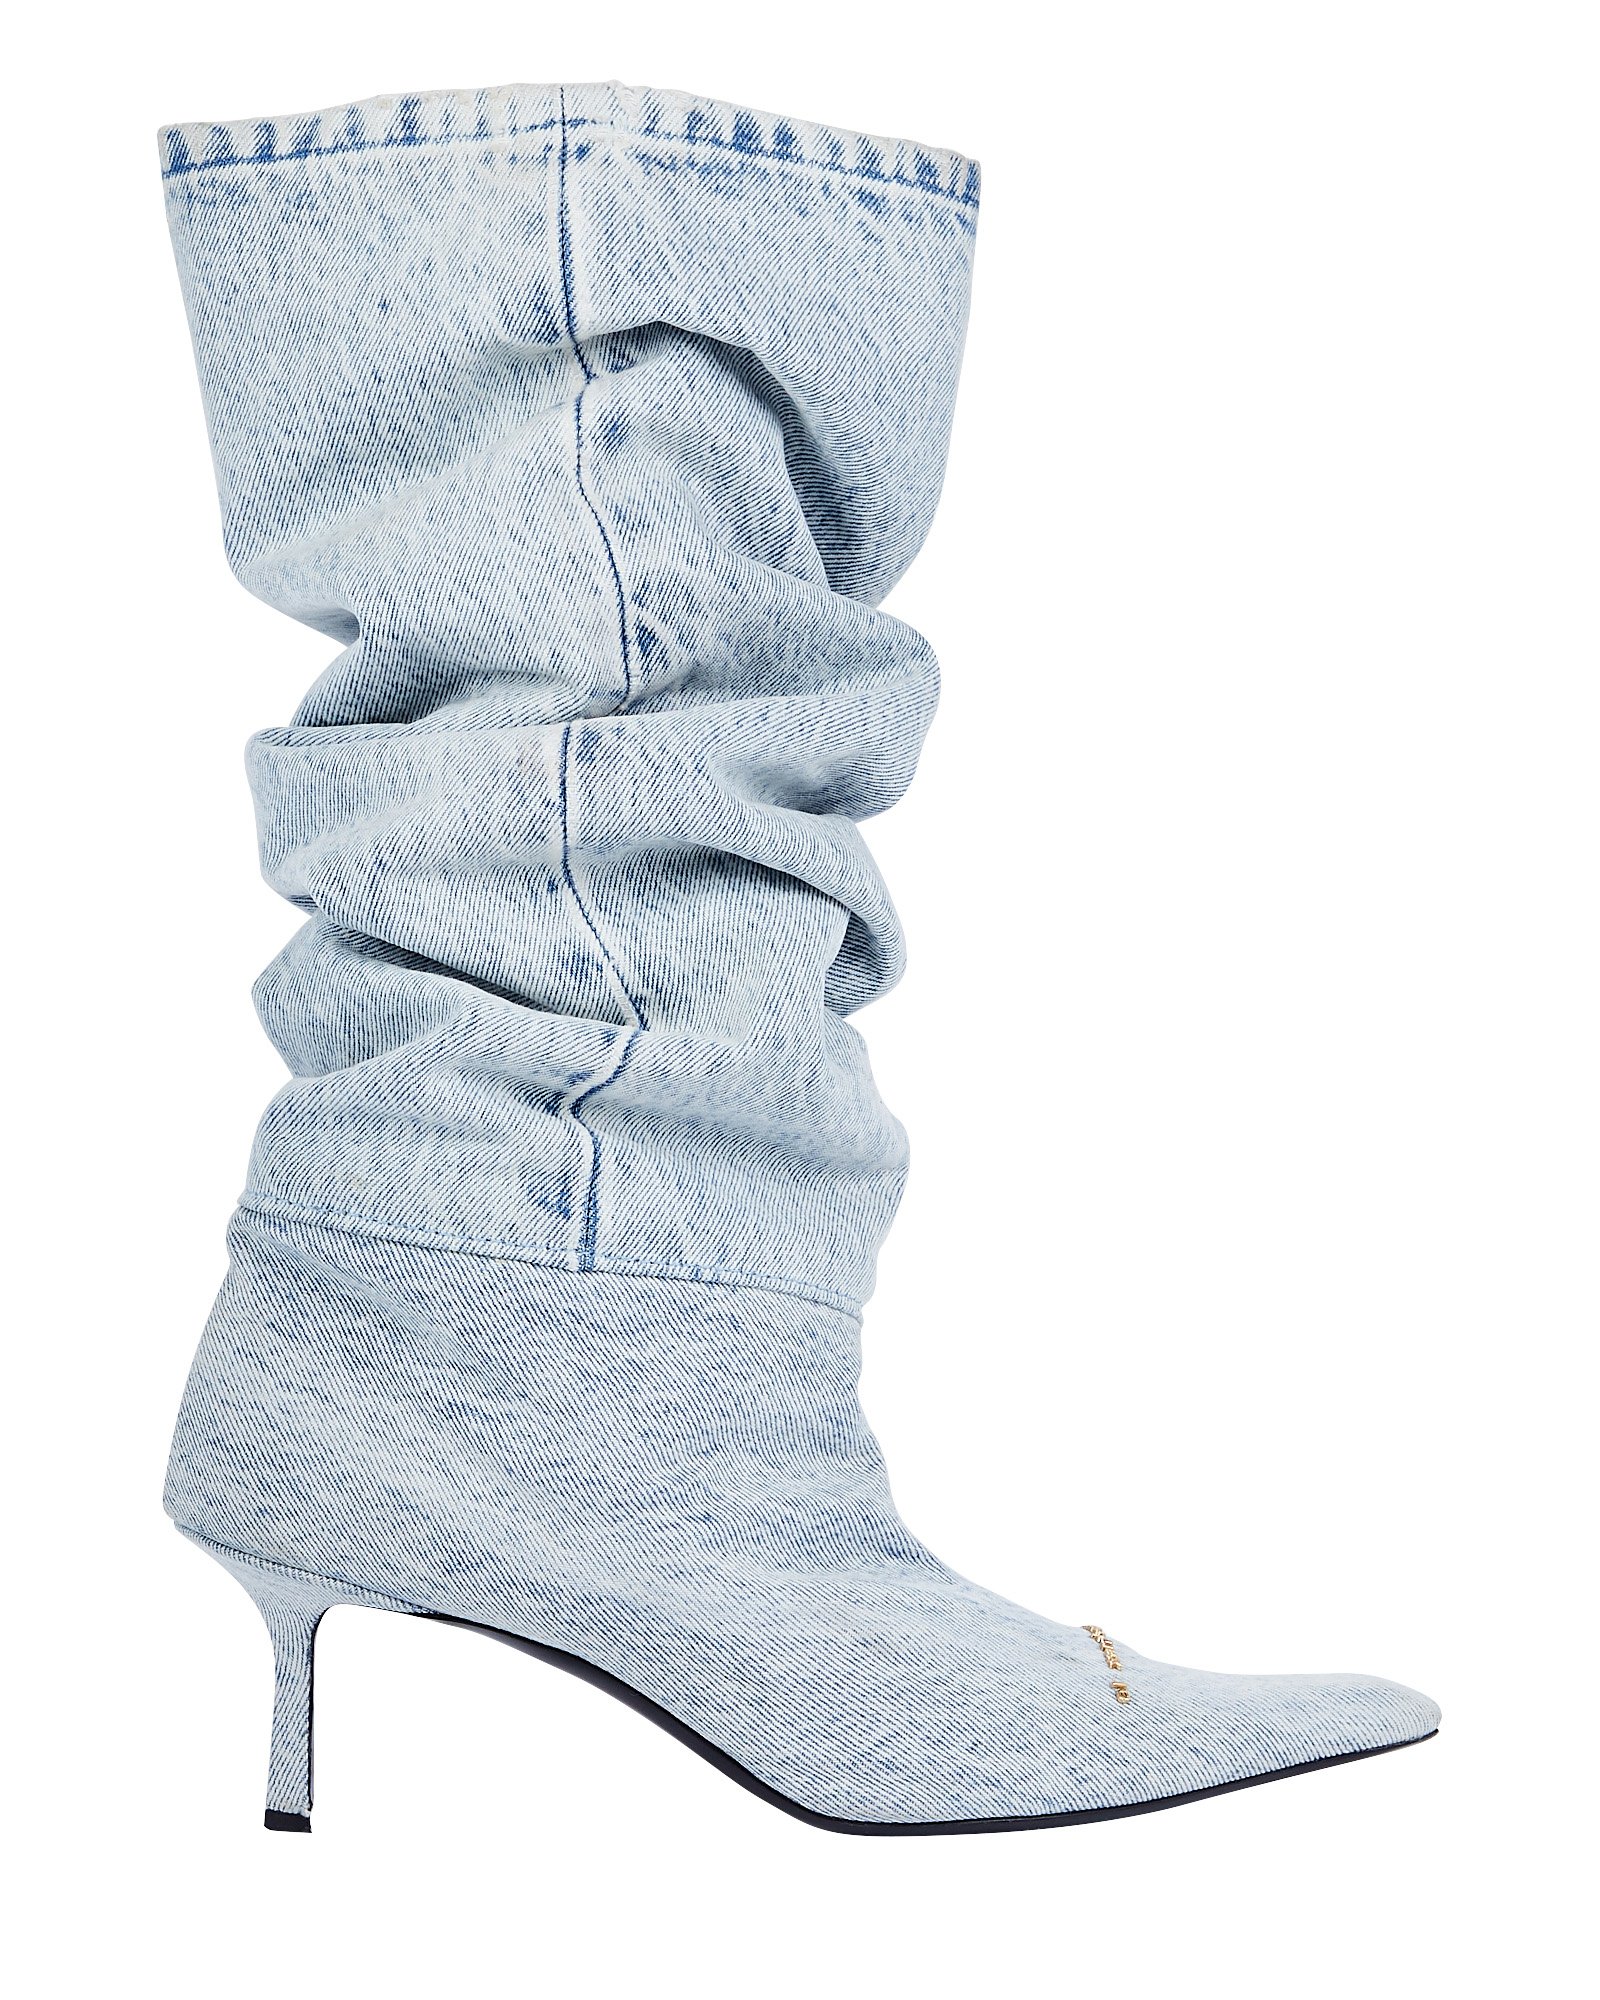 Alexander Wang Viola Slouchy Denim Boots in blue | INTERMIX®